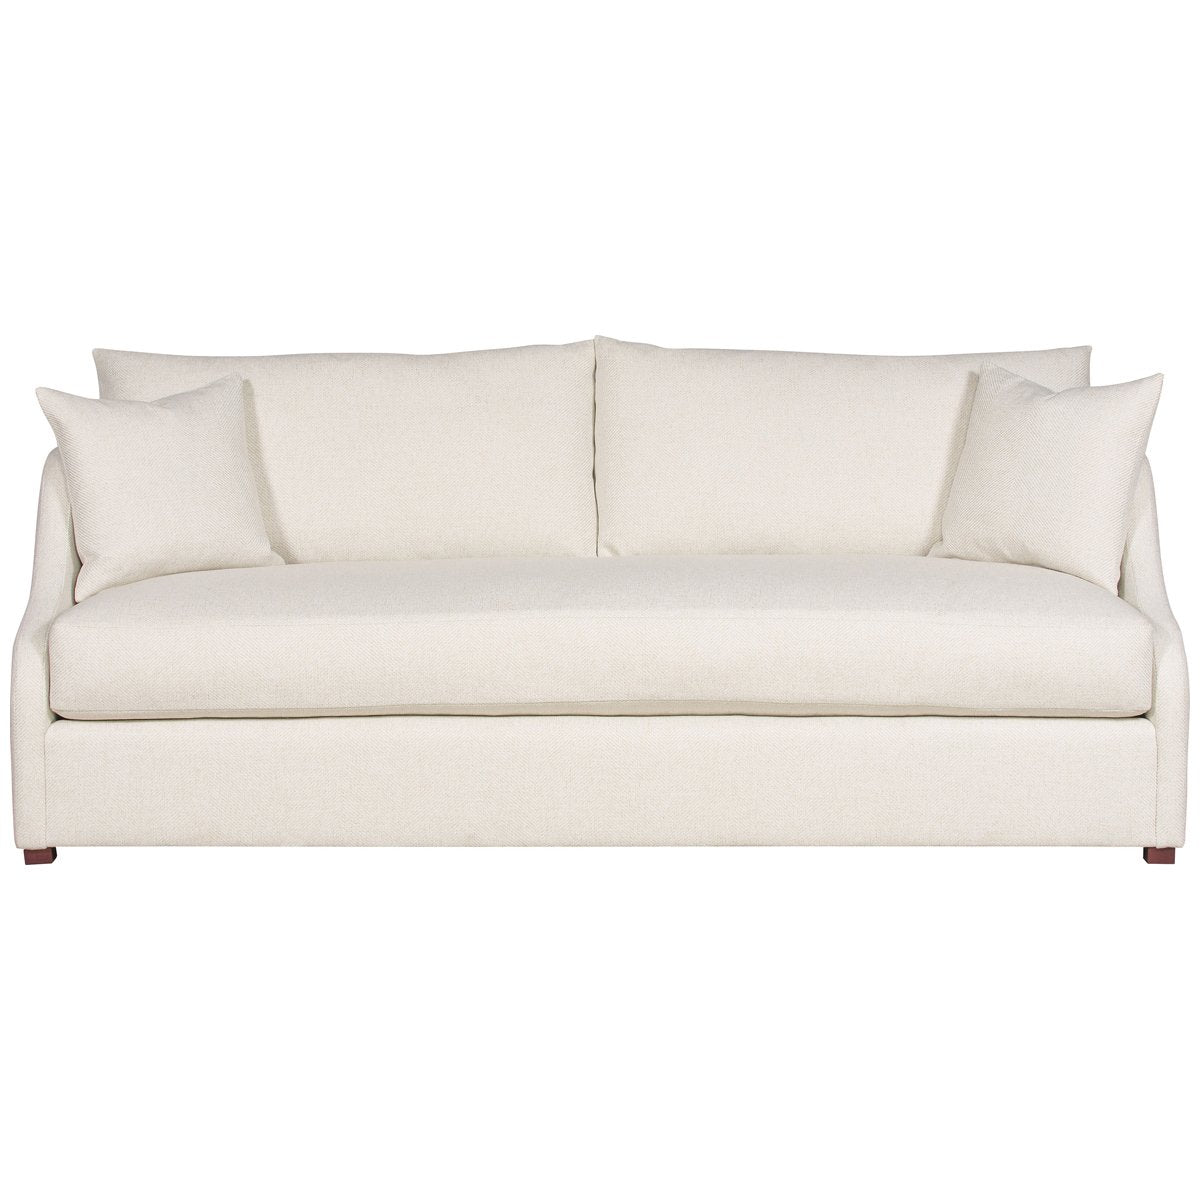 Vanguard Furniture Cora Bench Seat Sofa in Rodriguez Ivory